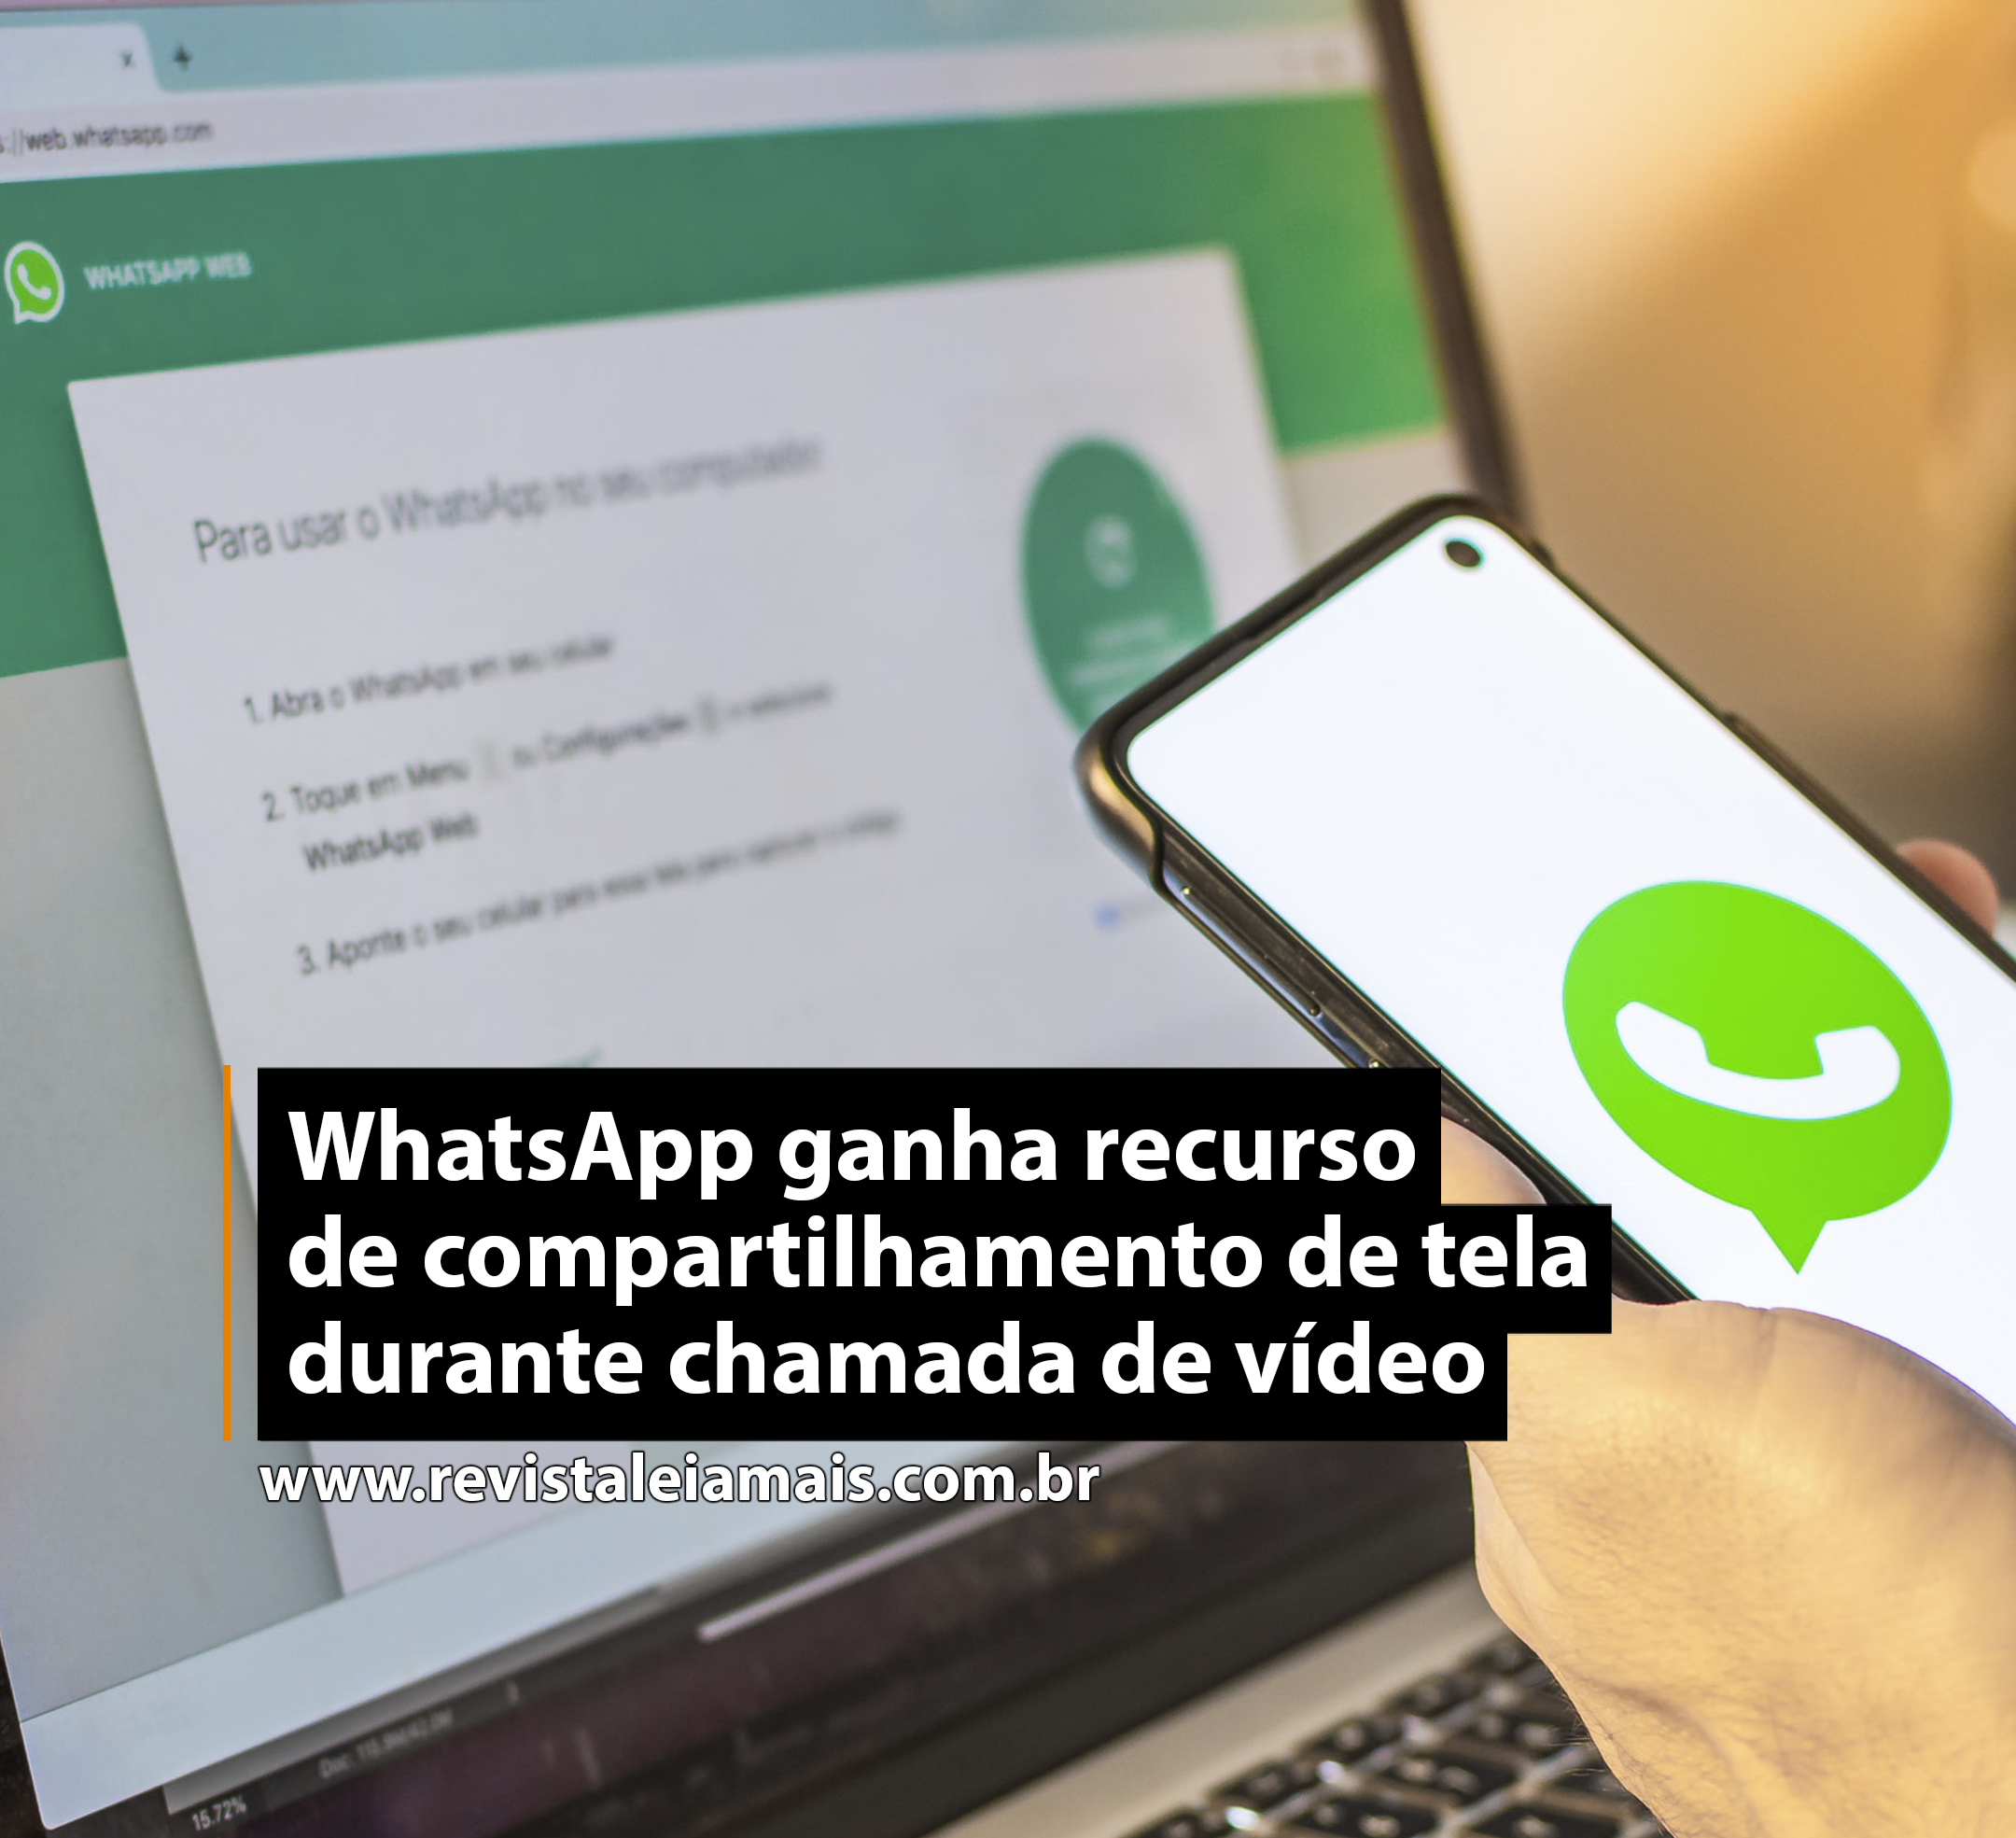 WhatsApp ganha recurso de compartilhamento de tela durante chamada de vídeo